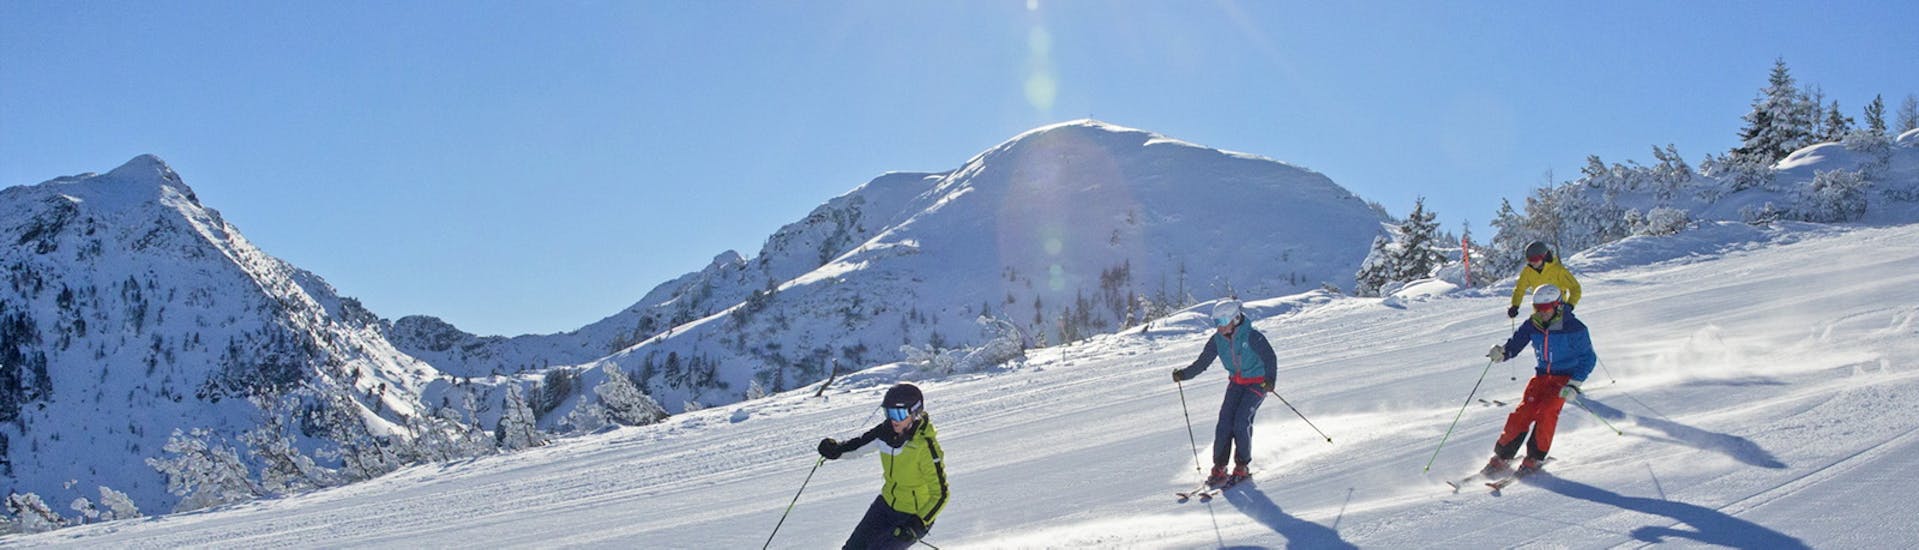 Lezioni di sci per adulti a partire da 15 anni per tutti i livelli.